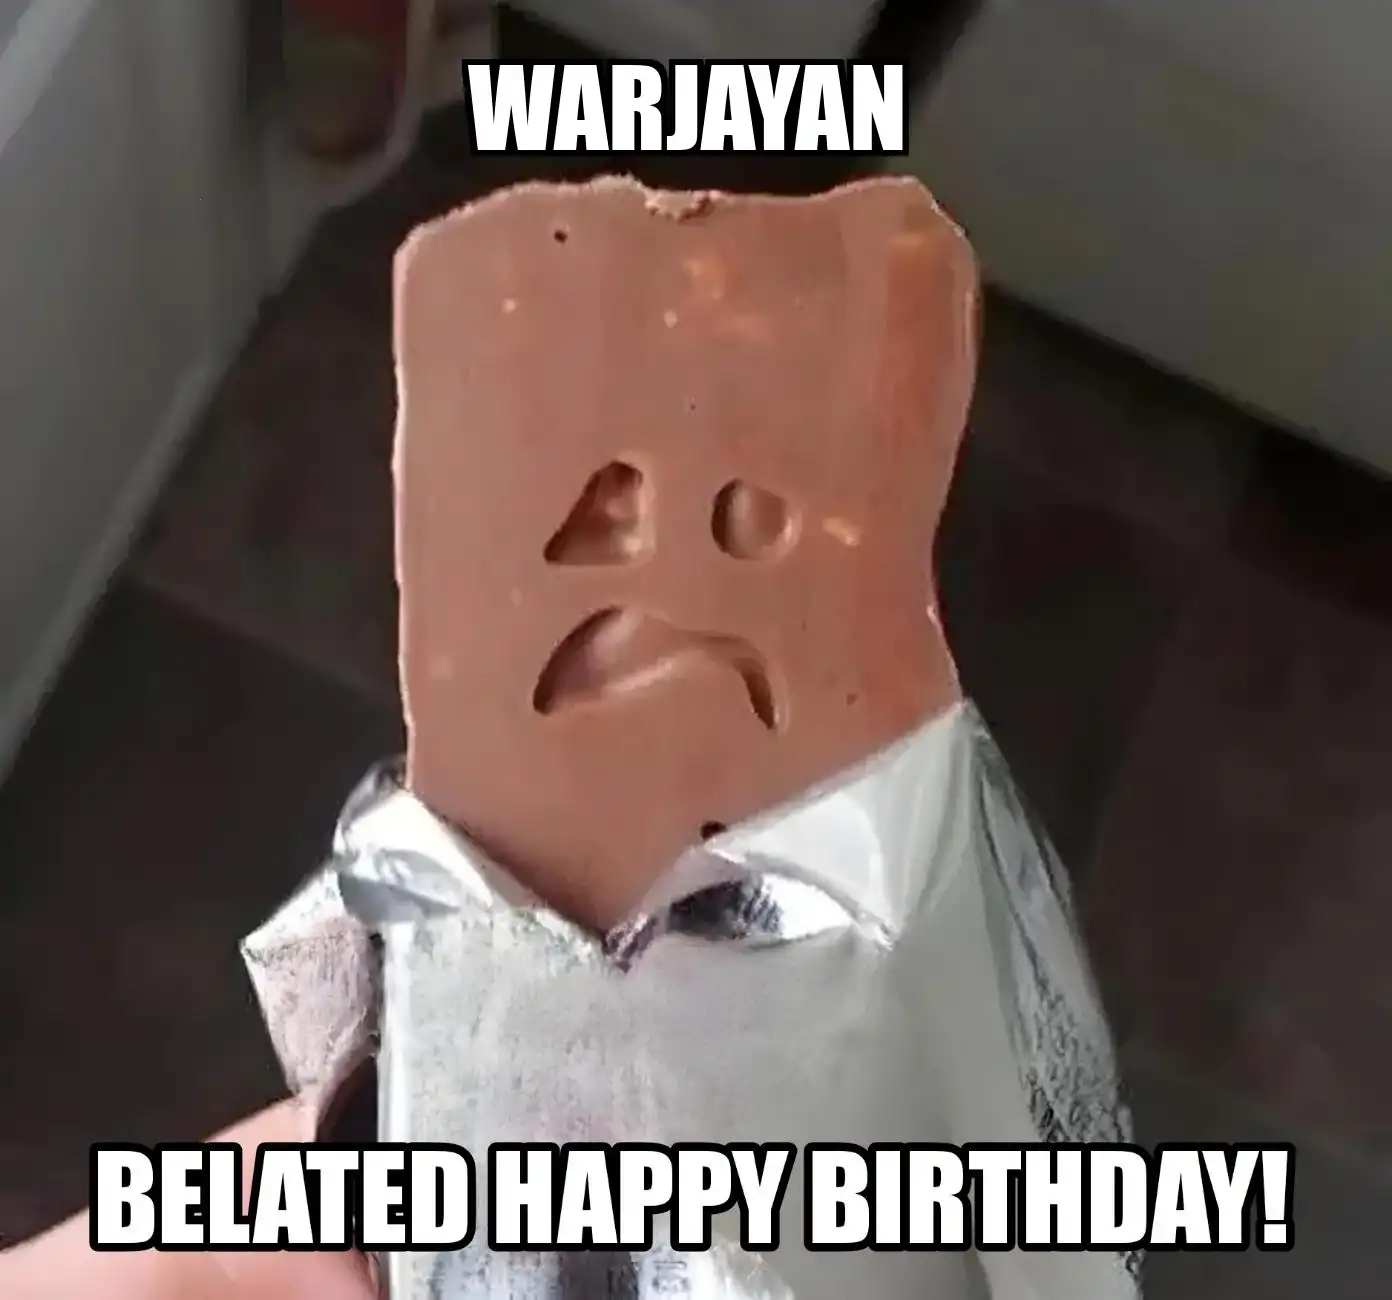 Happy Birthday Warjayan Belated Happy Birthday Meme